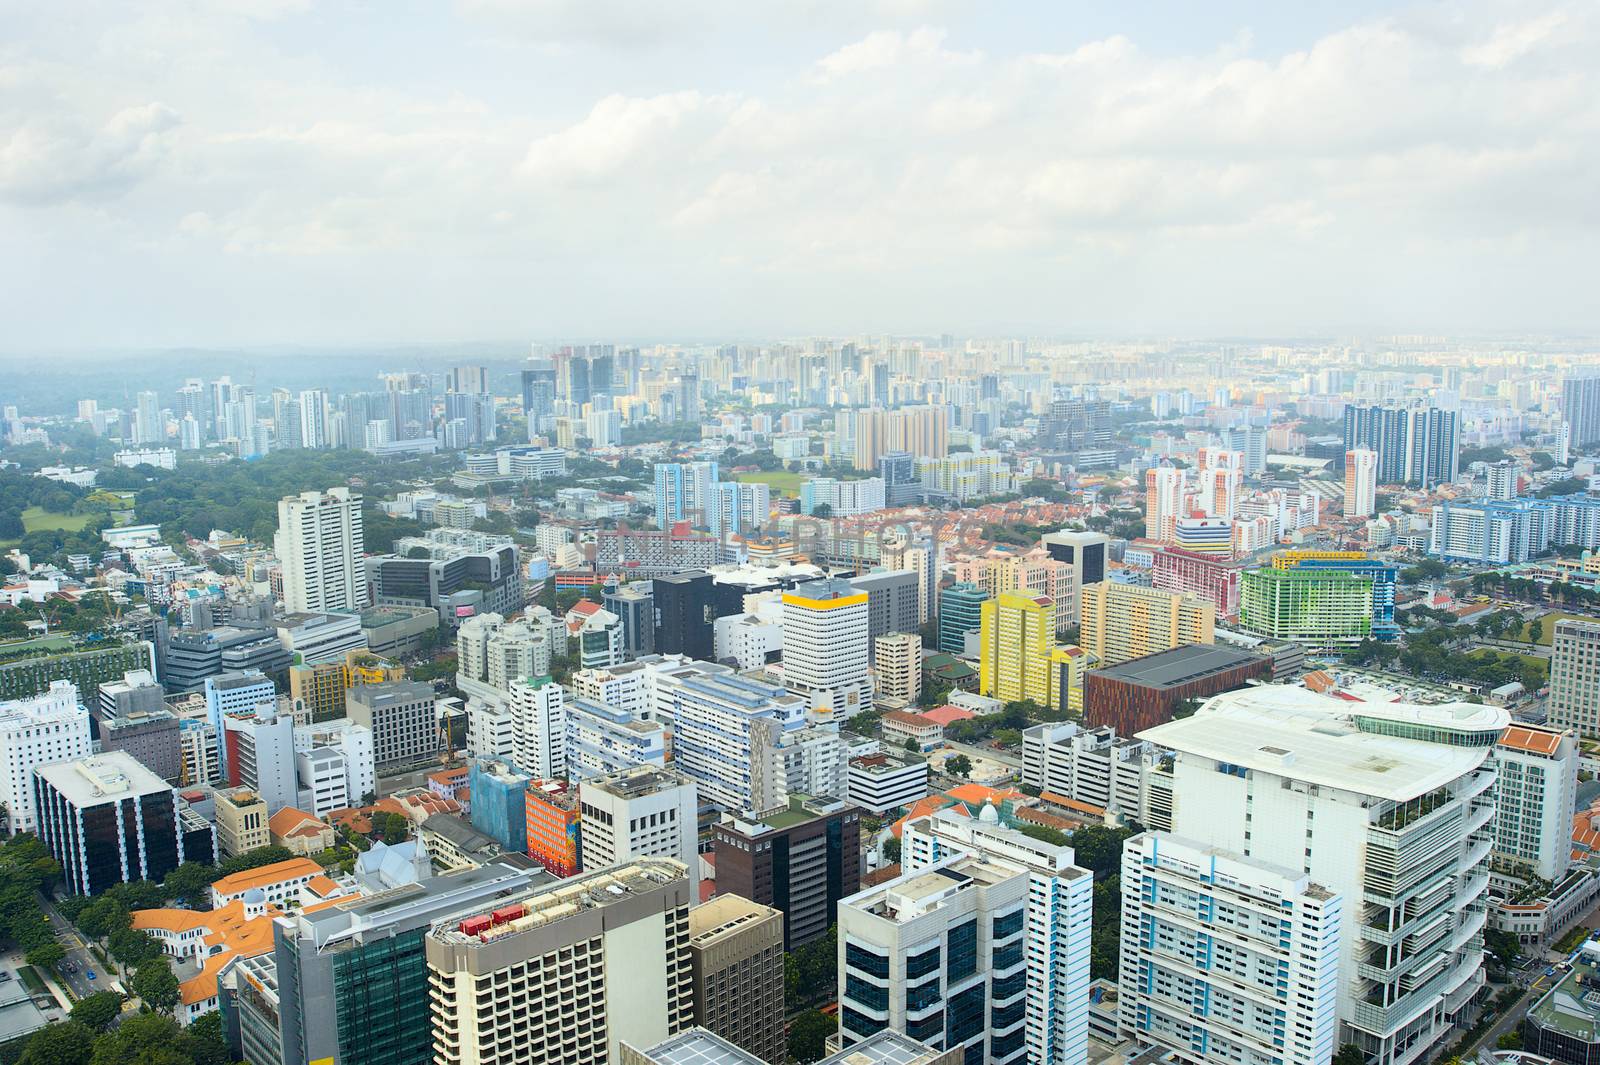 Aerial view on Singapore by joyfull